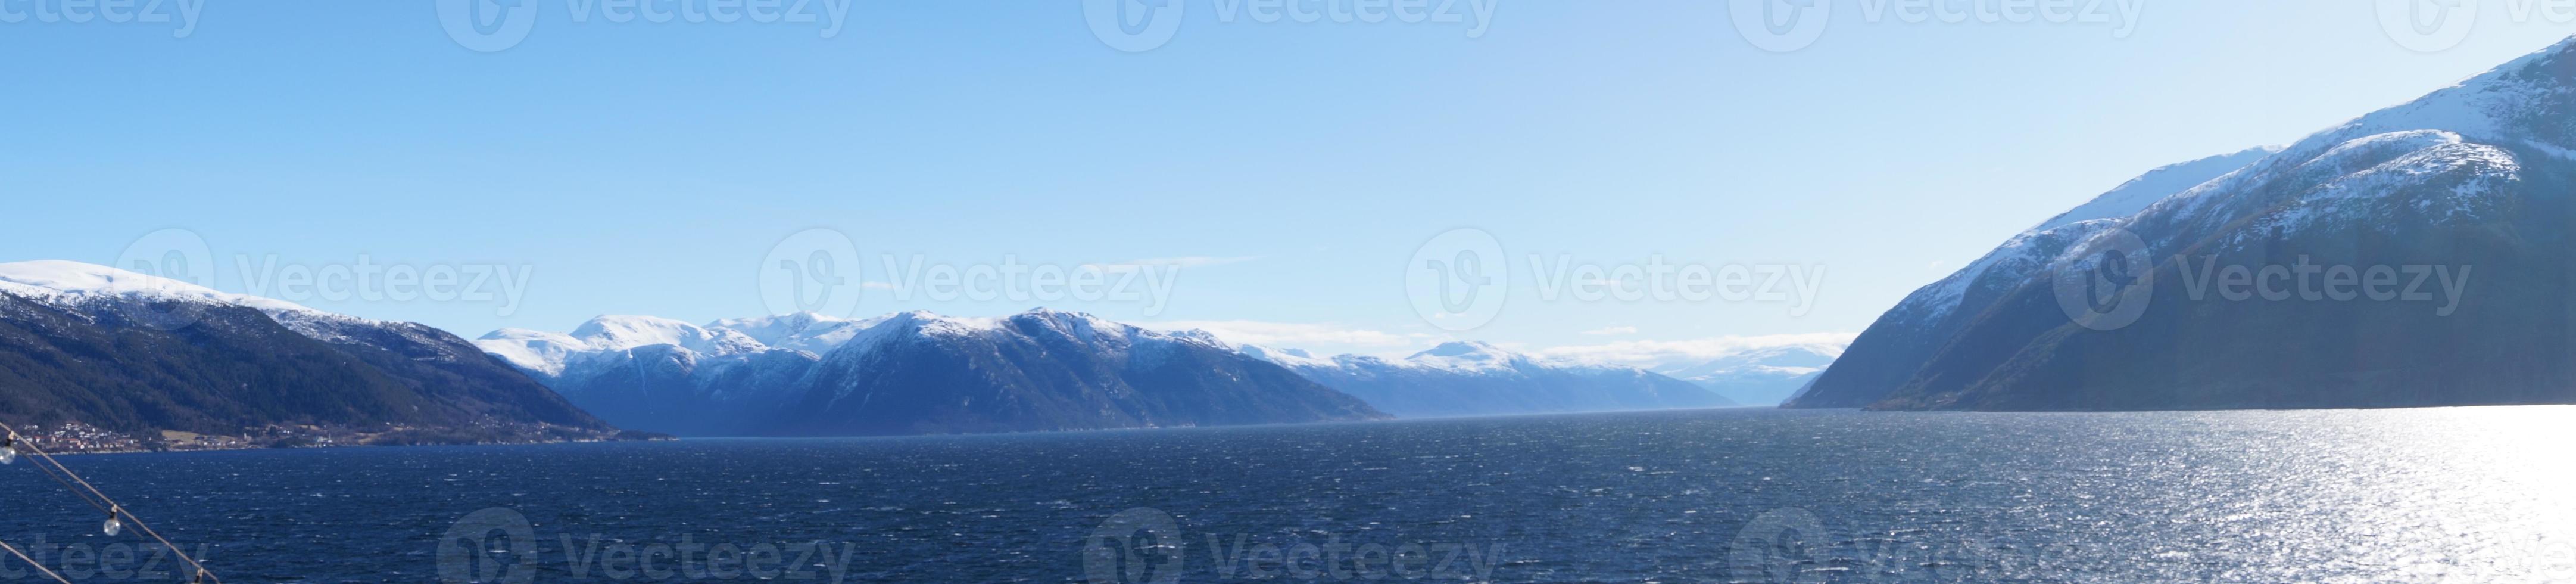 Sognefjord en Noruega foto